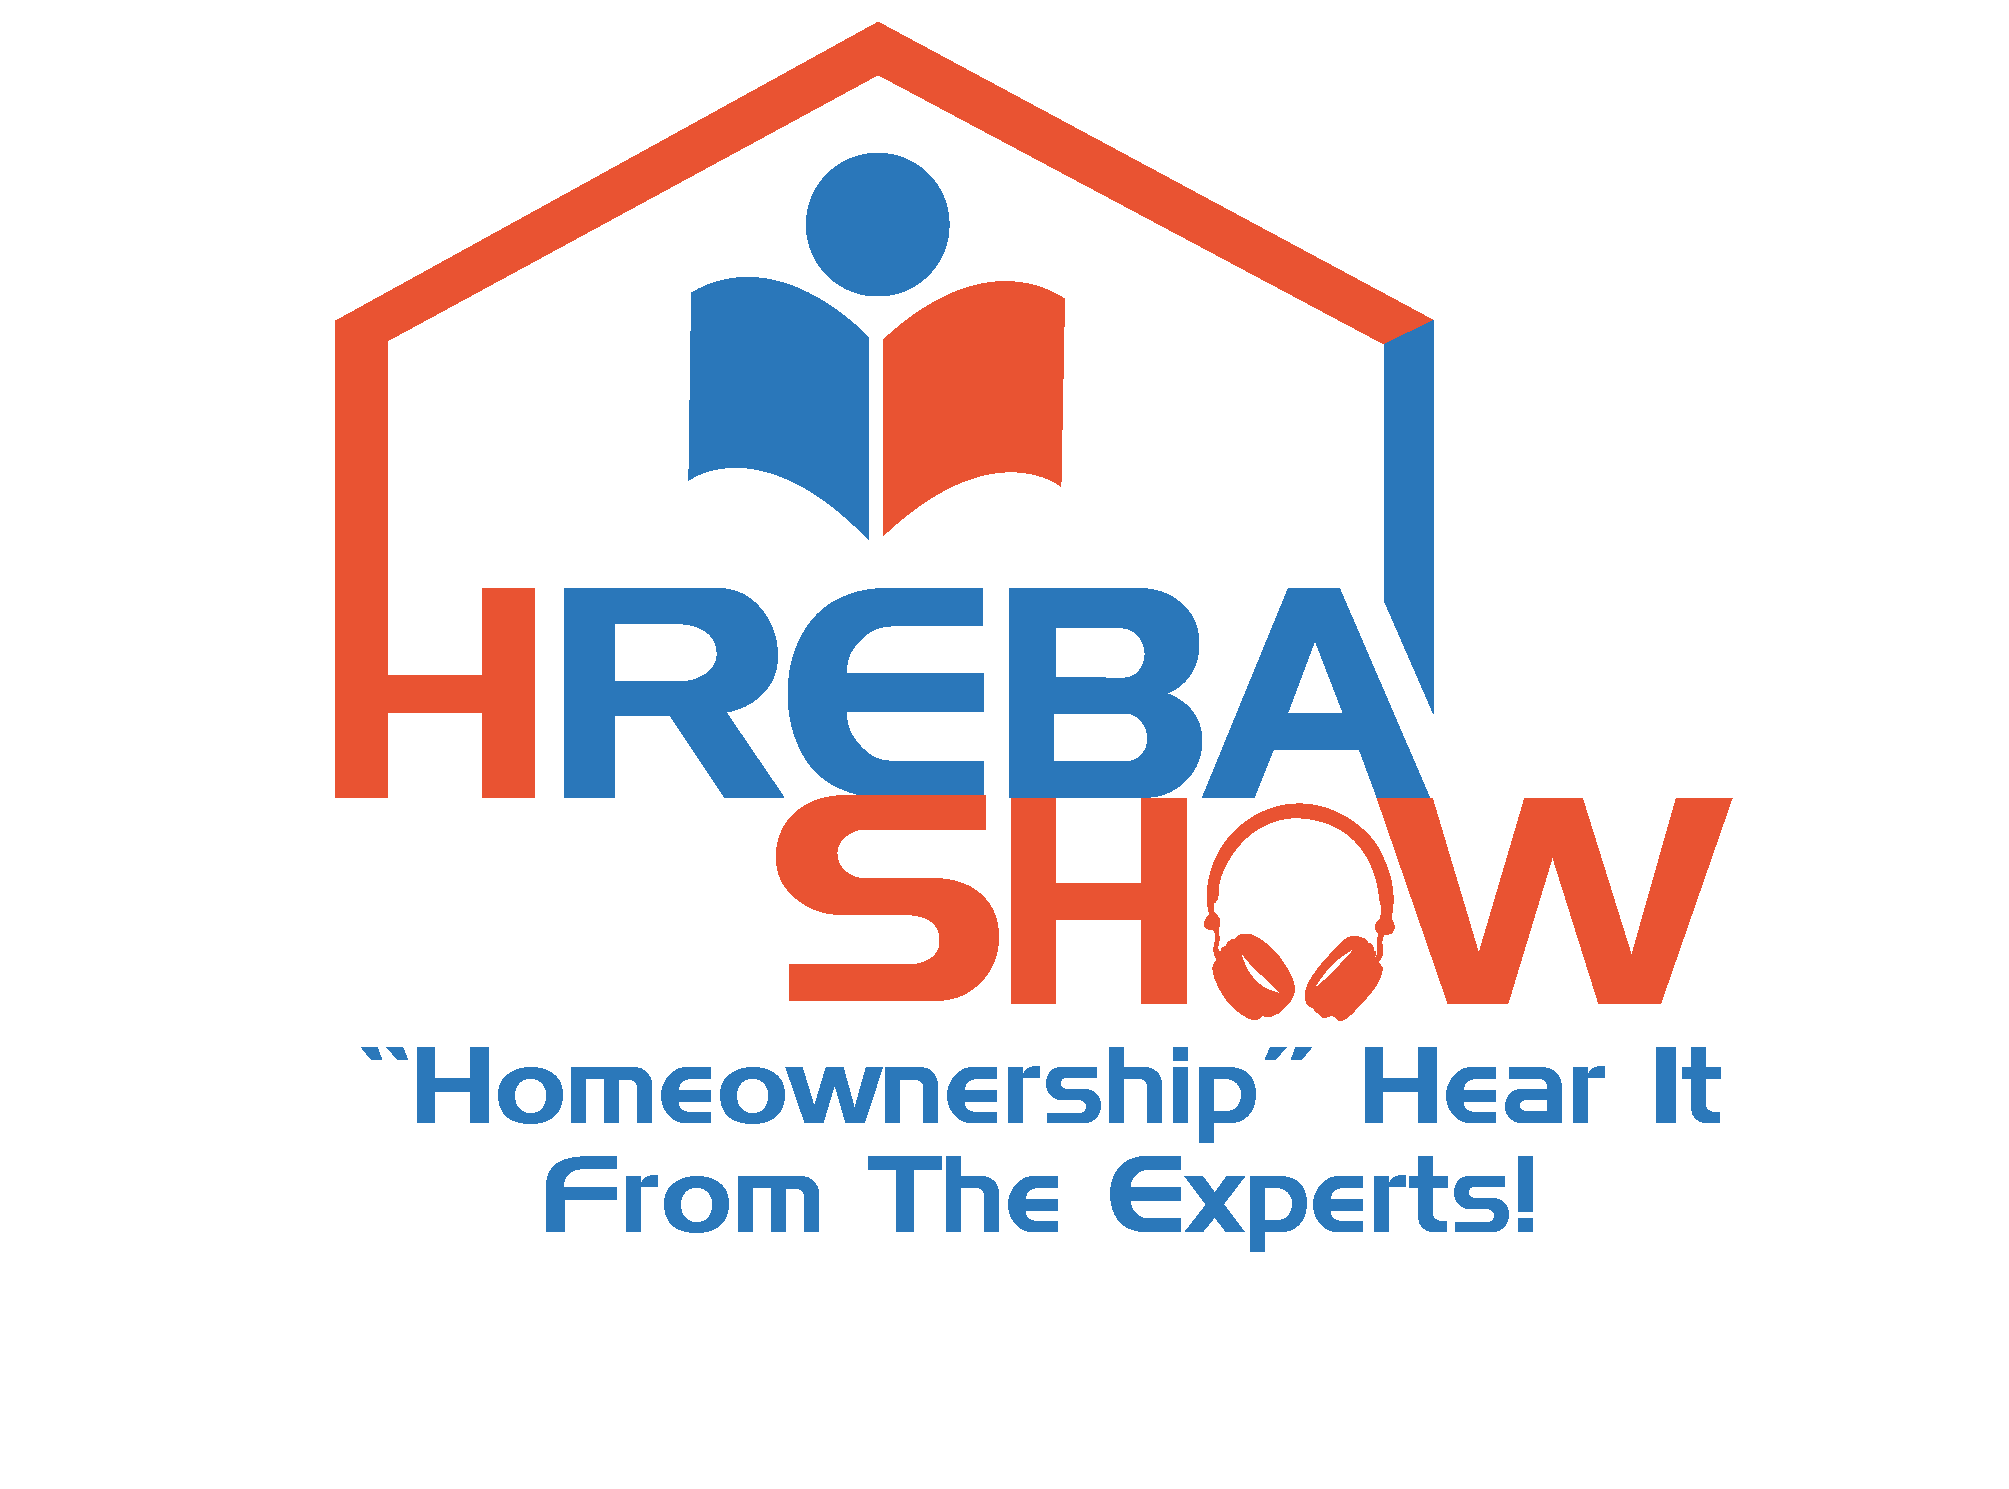 HREBA Show "Homeownership" Hear It From The Experts!